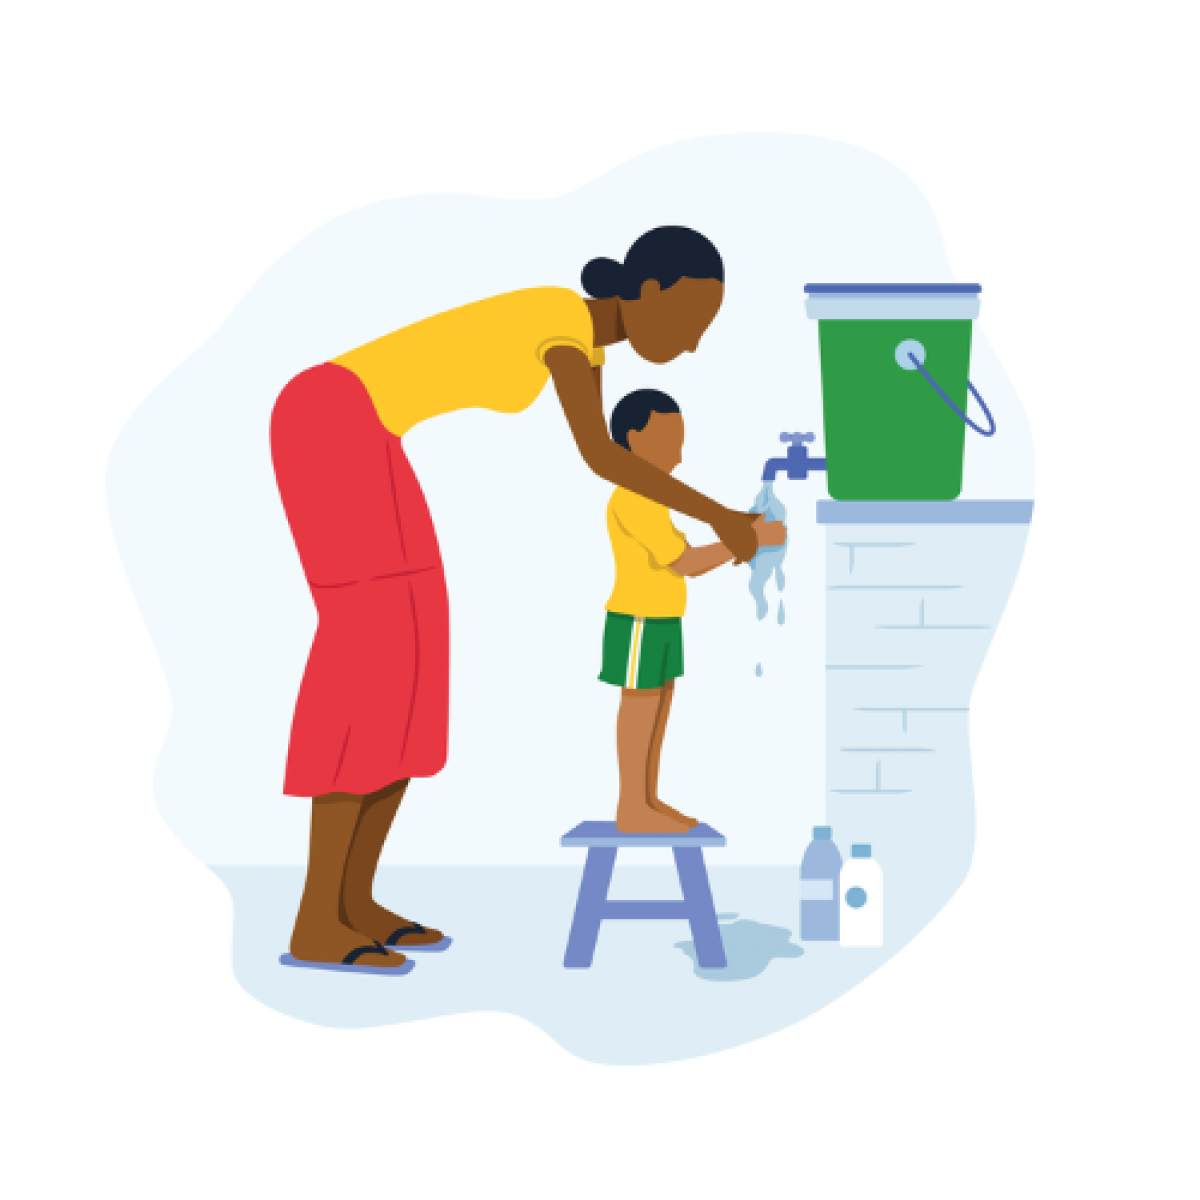 Illustration of mother instructing her child on proper handwashing